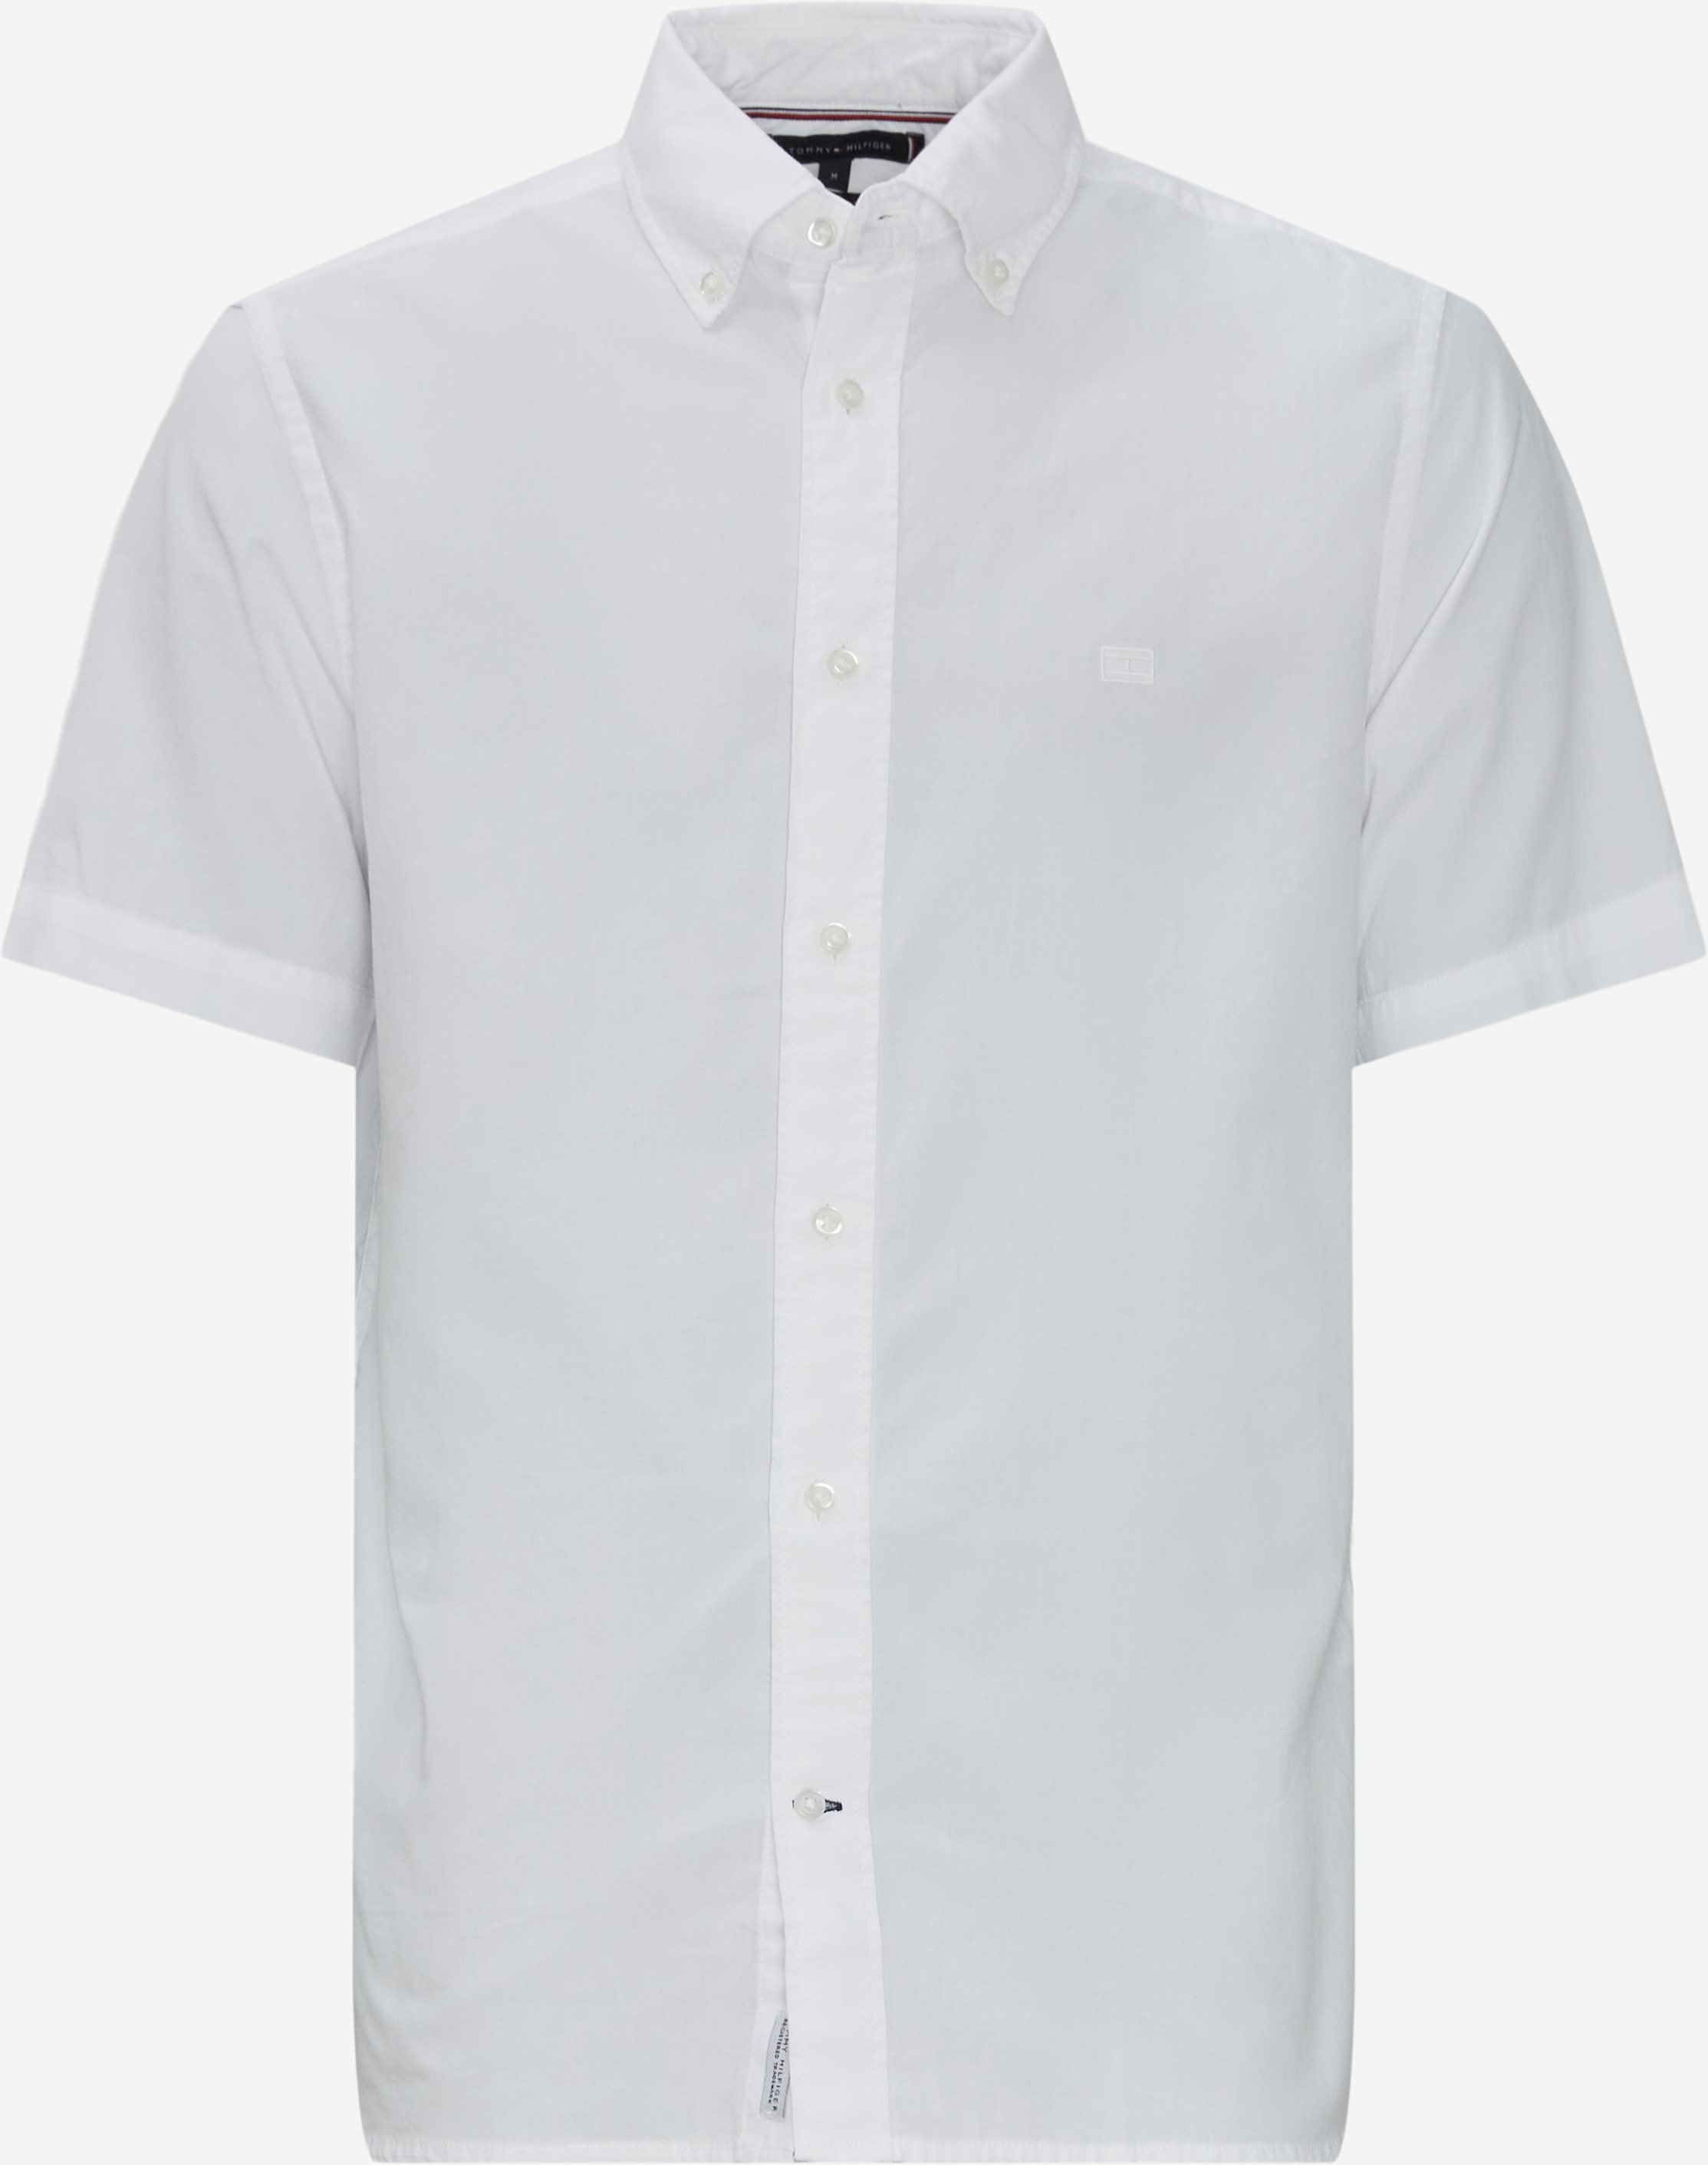 Short-sleeved shirts - Regular fit - White